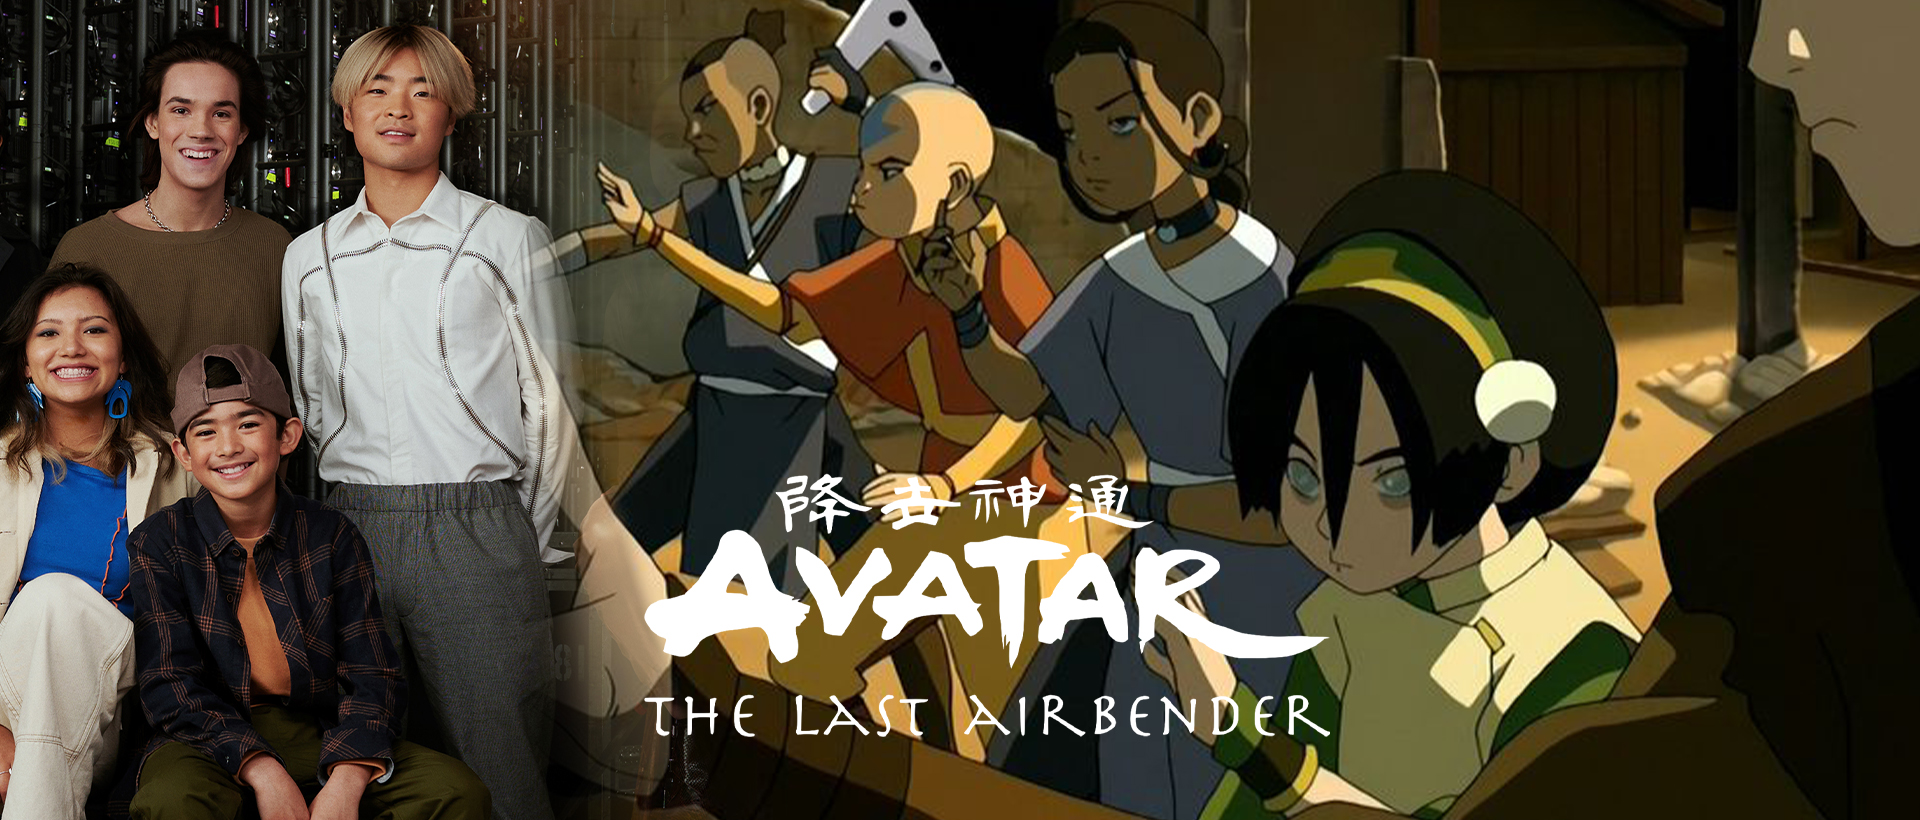 Netflix Is Considering Filming 'Avatar: The Last Airbender' Season 2 & 3  Back-to-Back - Knight Edge Media